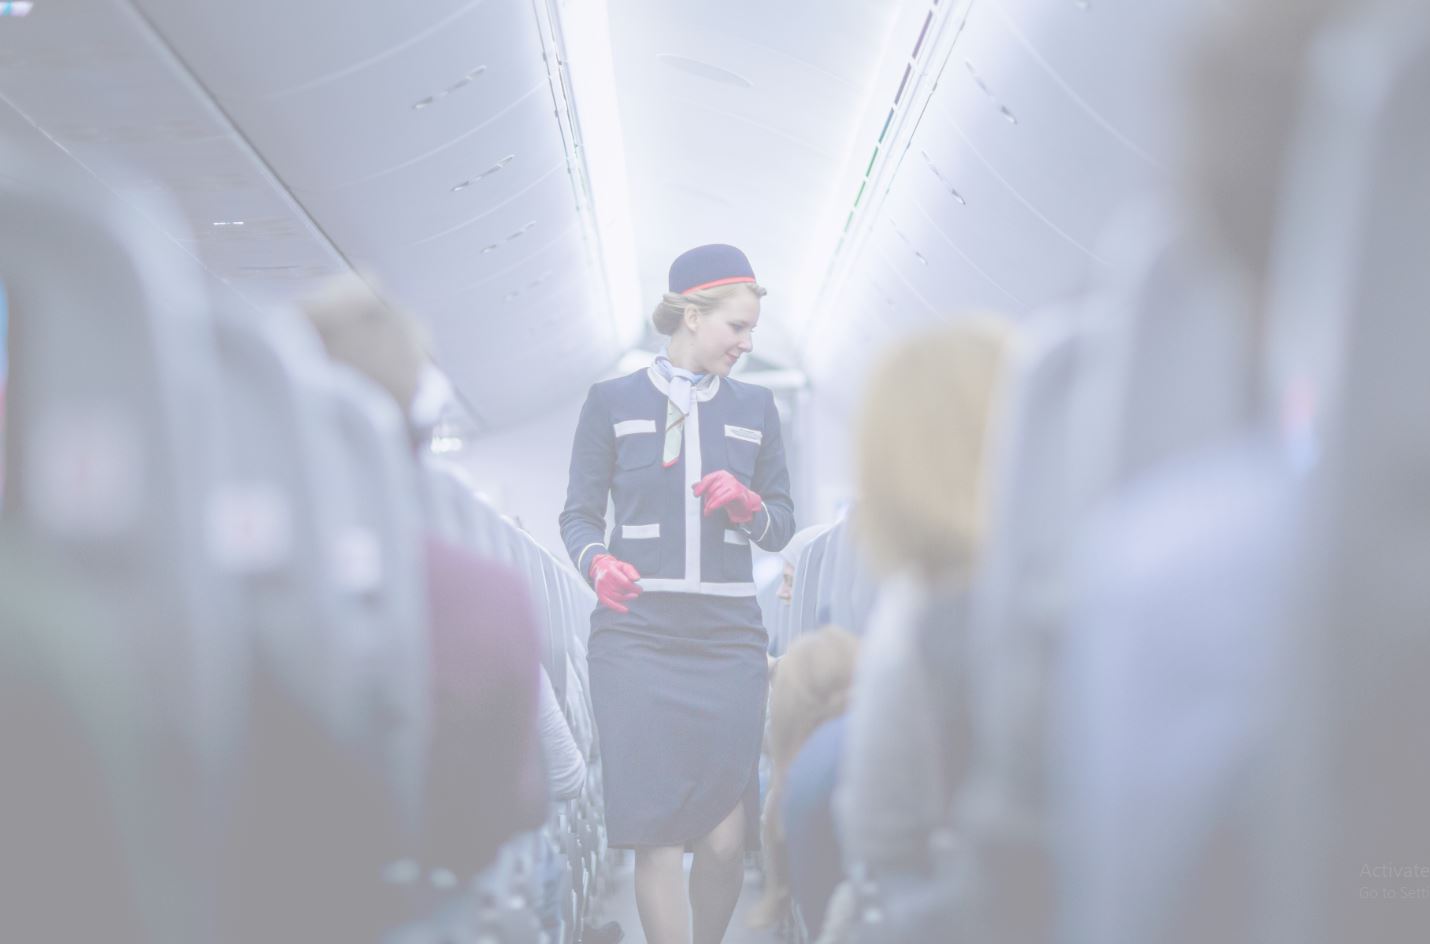 Stewardess aisle